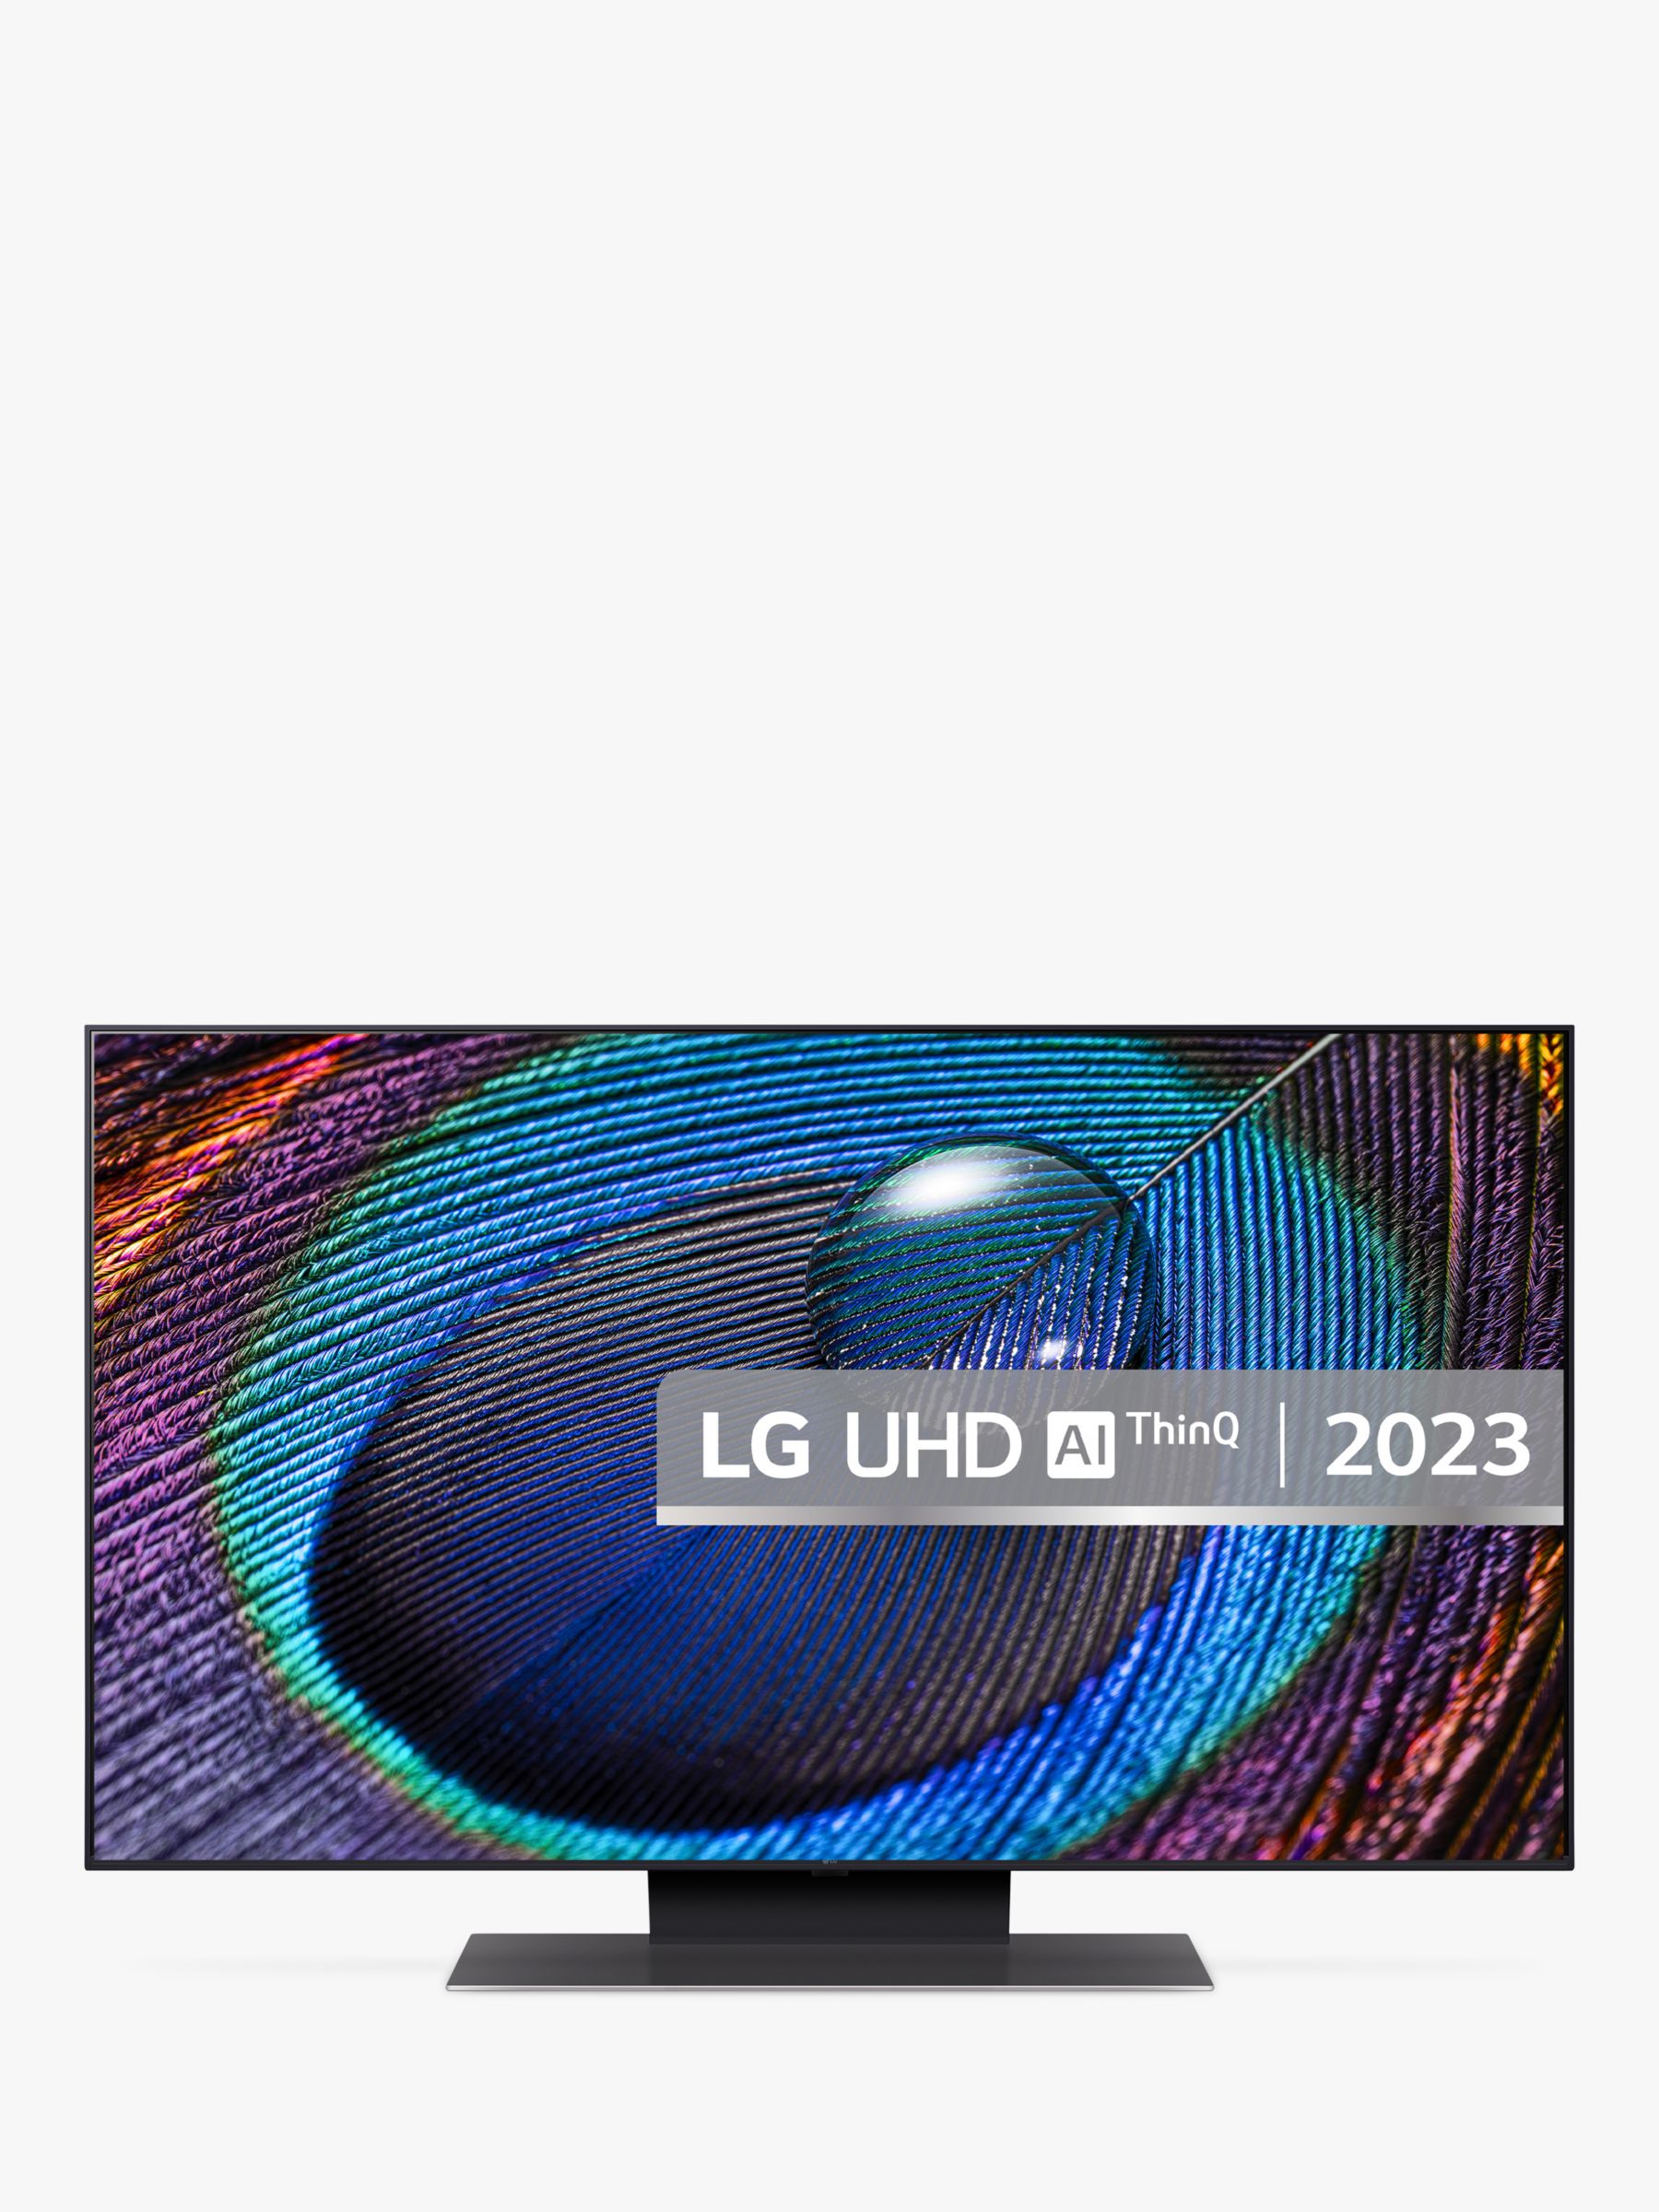 LG: OLED TVs, 4K Ultra HD TVs, LED TVs